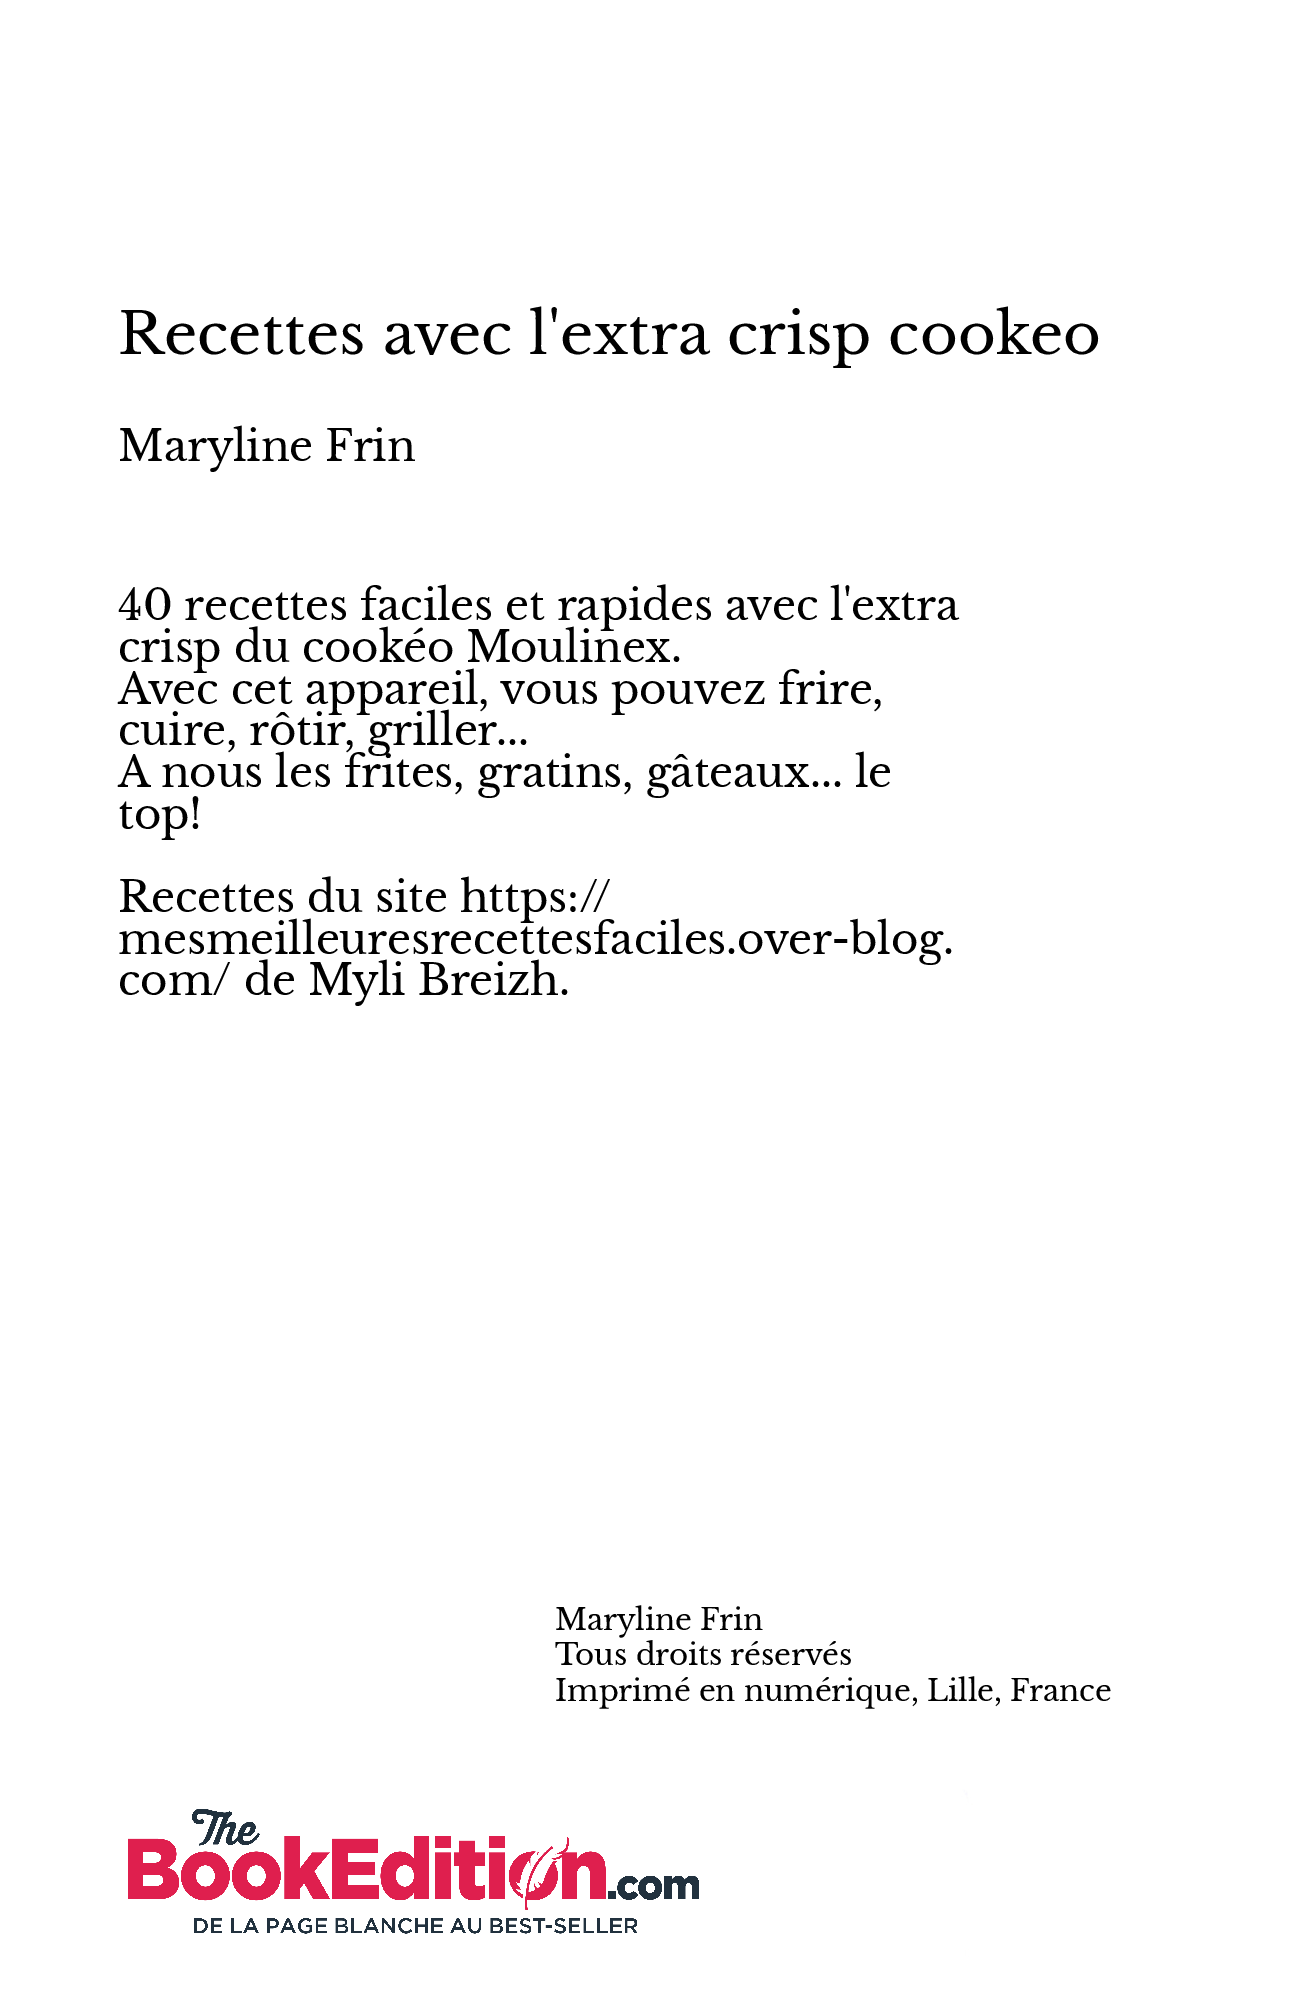 Recettes à l'extra crisp 5 - Maryline Frin